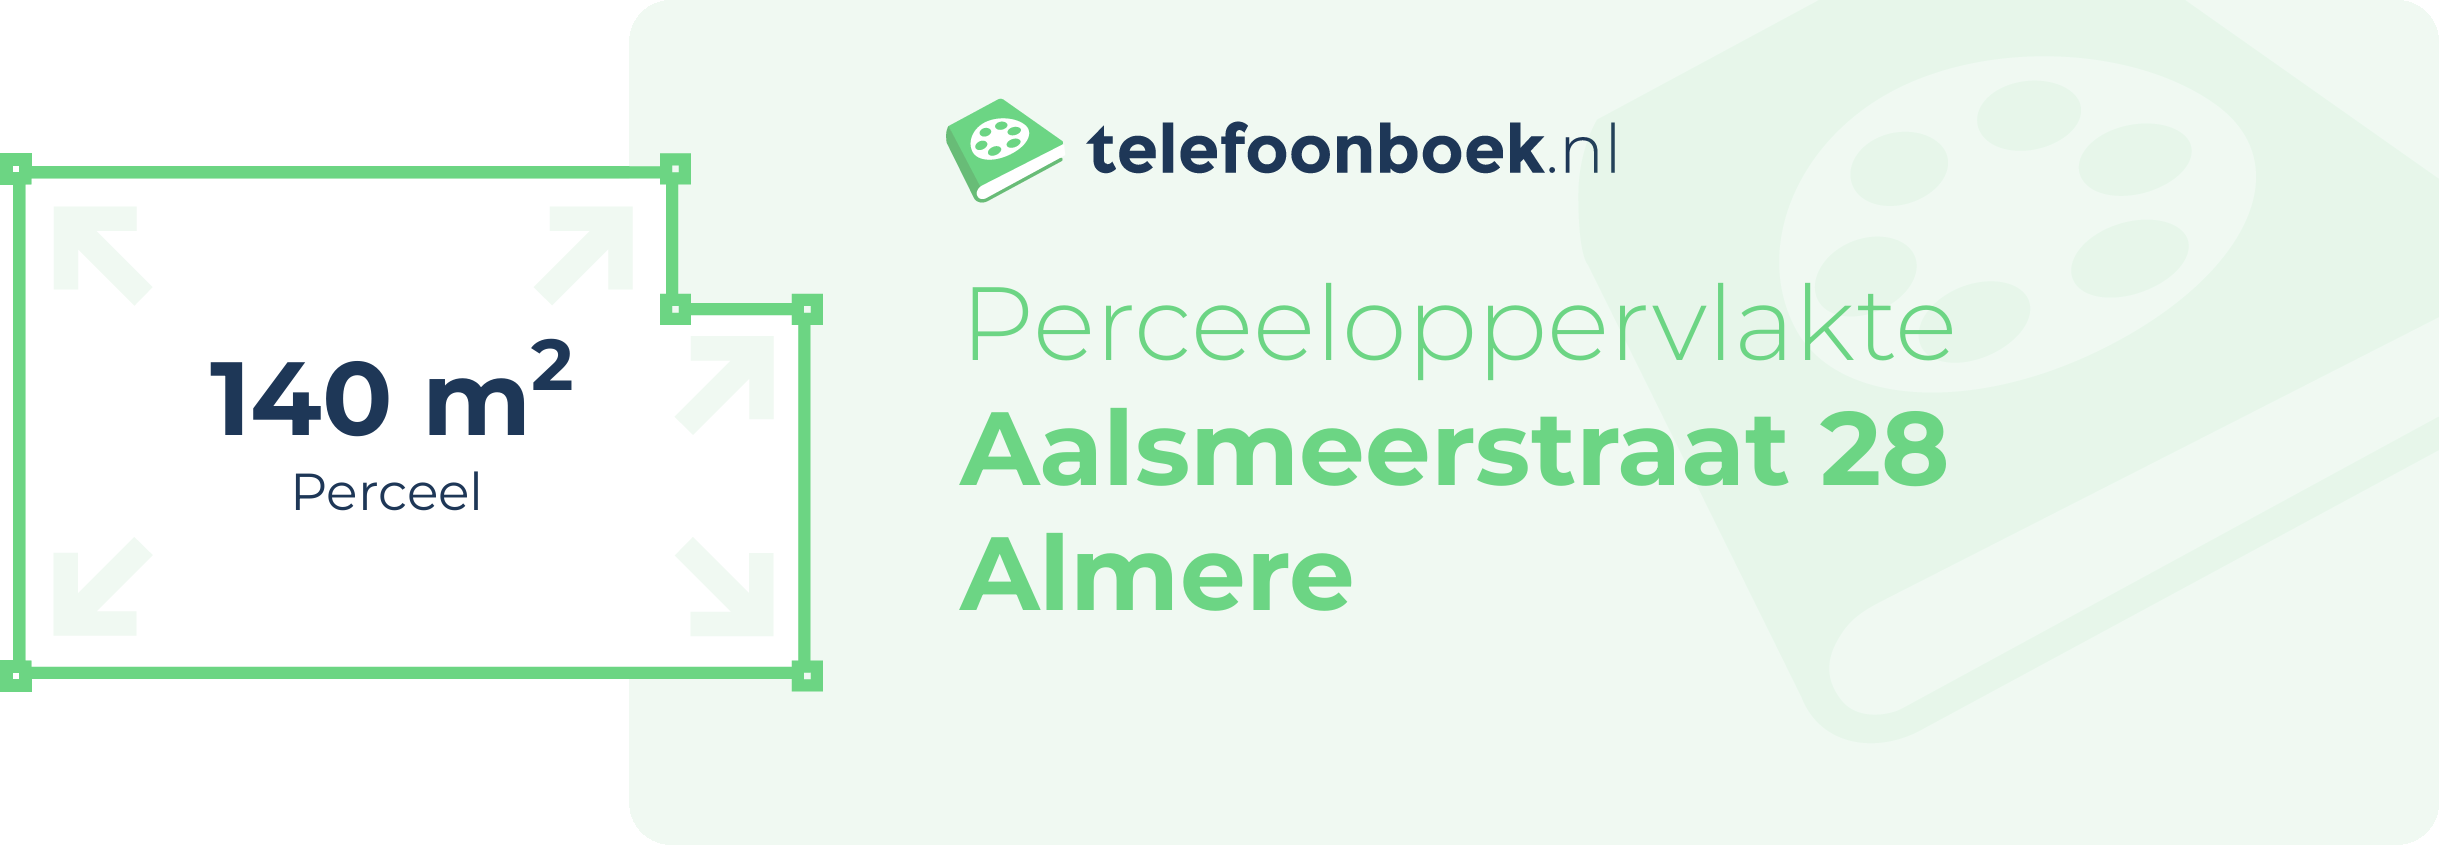 Perceeloppervlakte Aalsmeerstraat 28 Almere